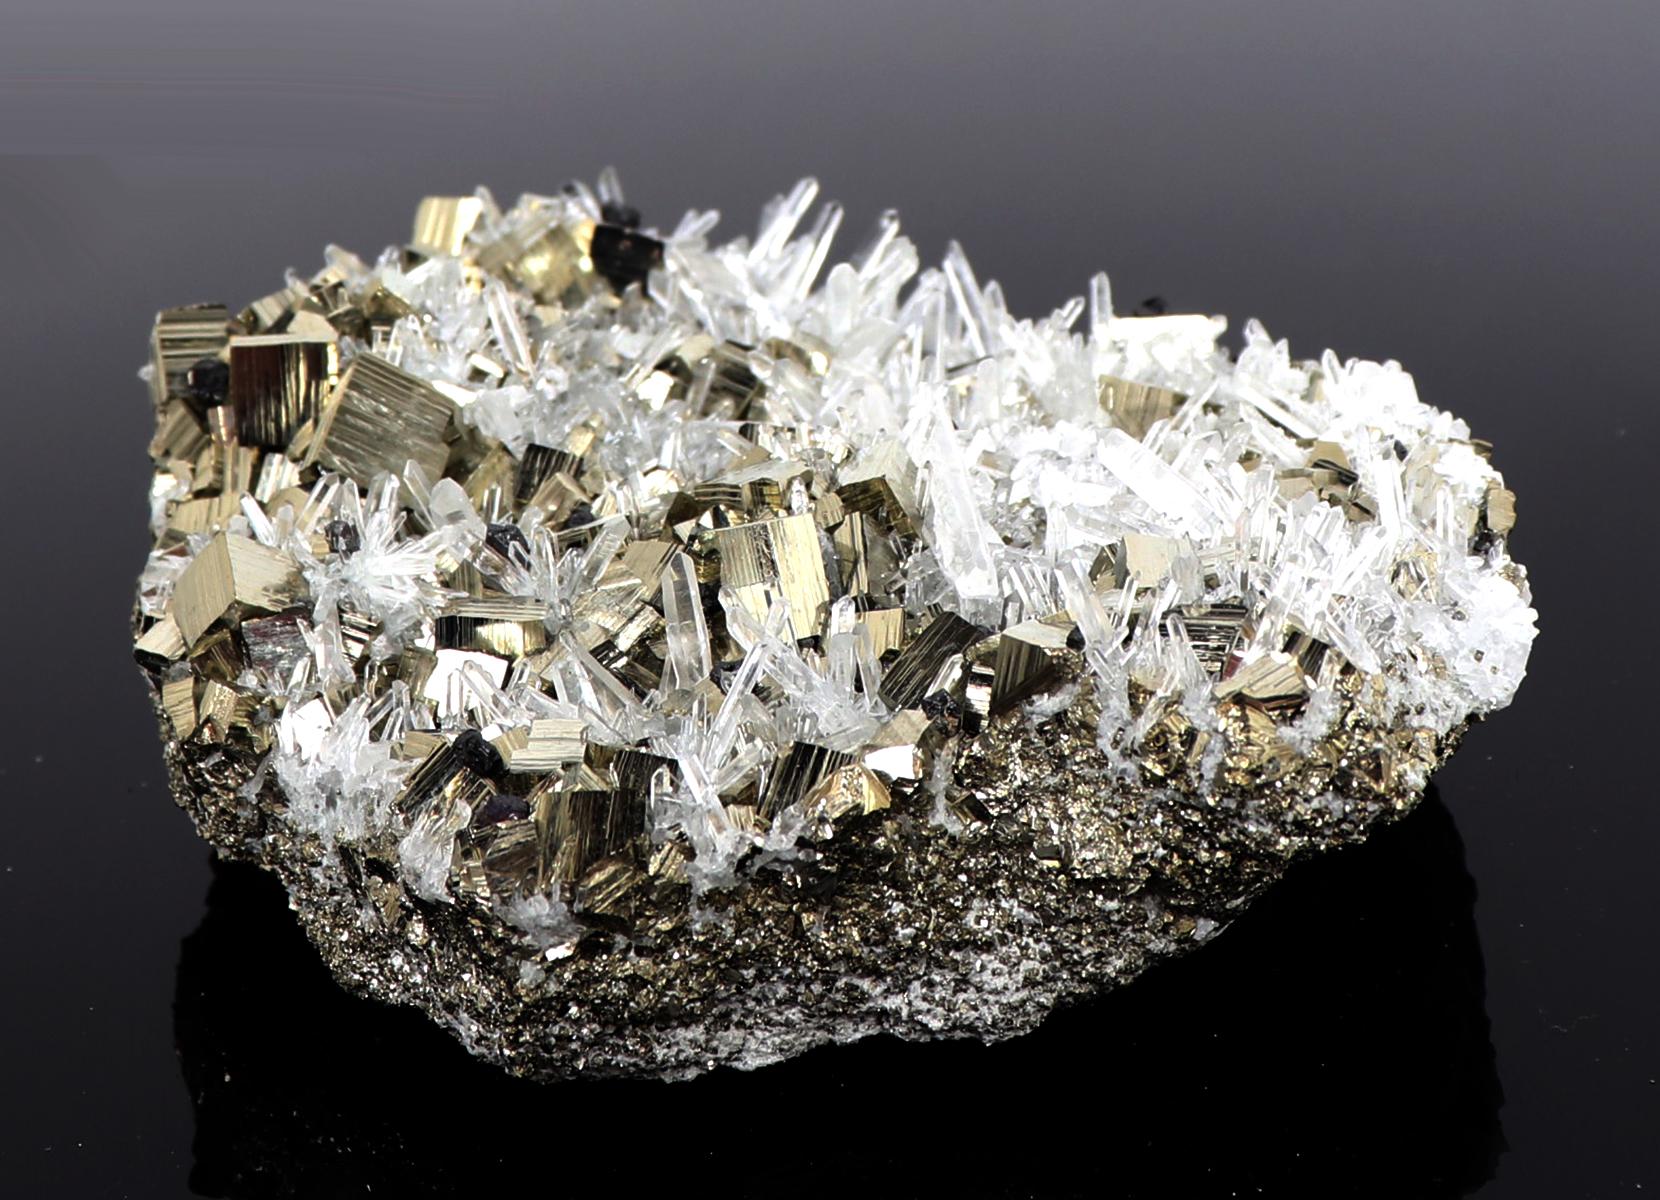 Cubic Pyrite, Sphalerite and Quartz Crystal Mineral Specimen